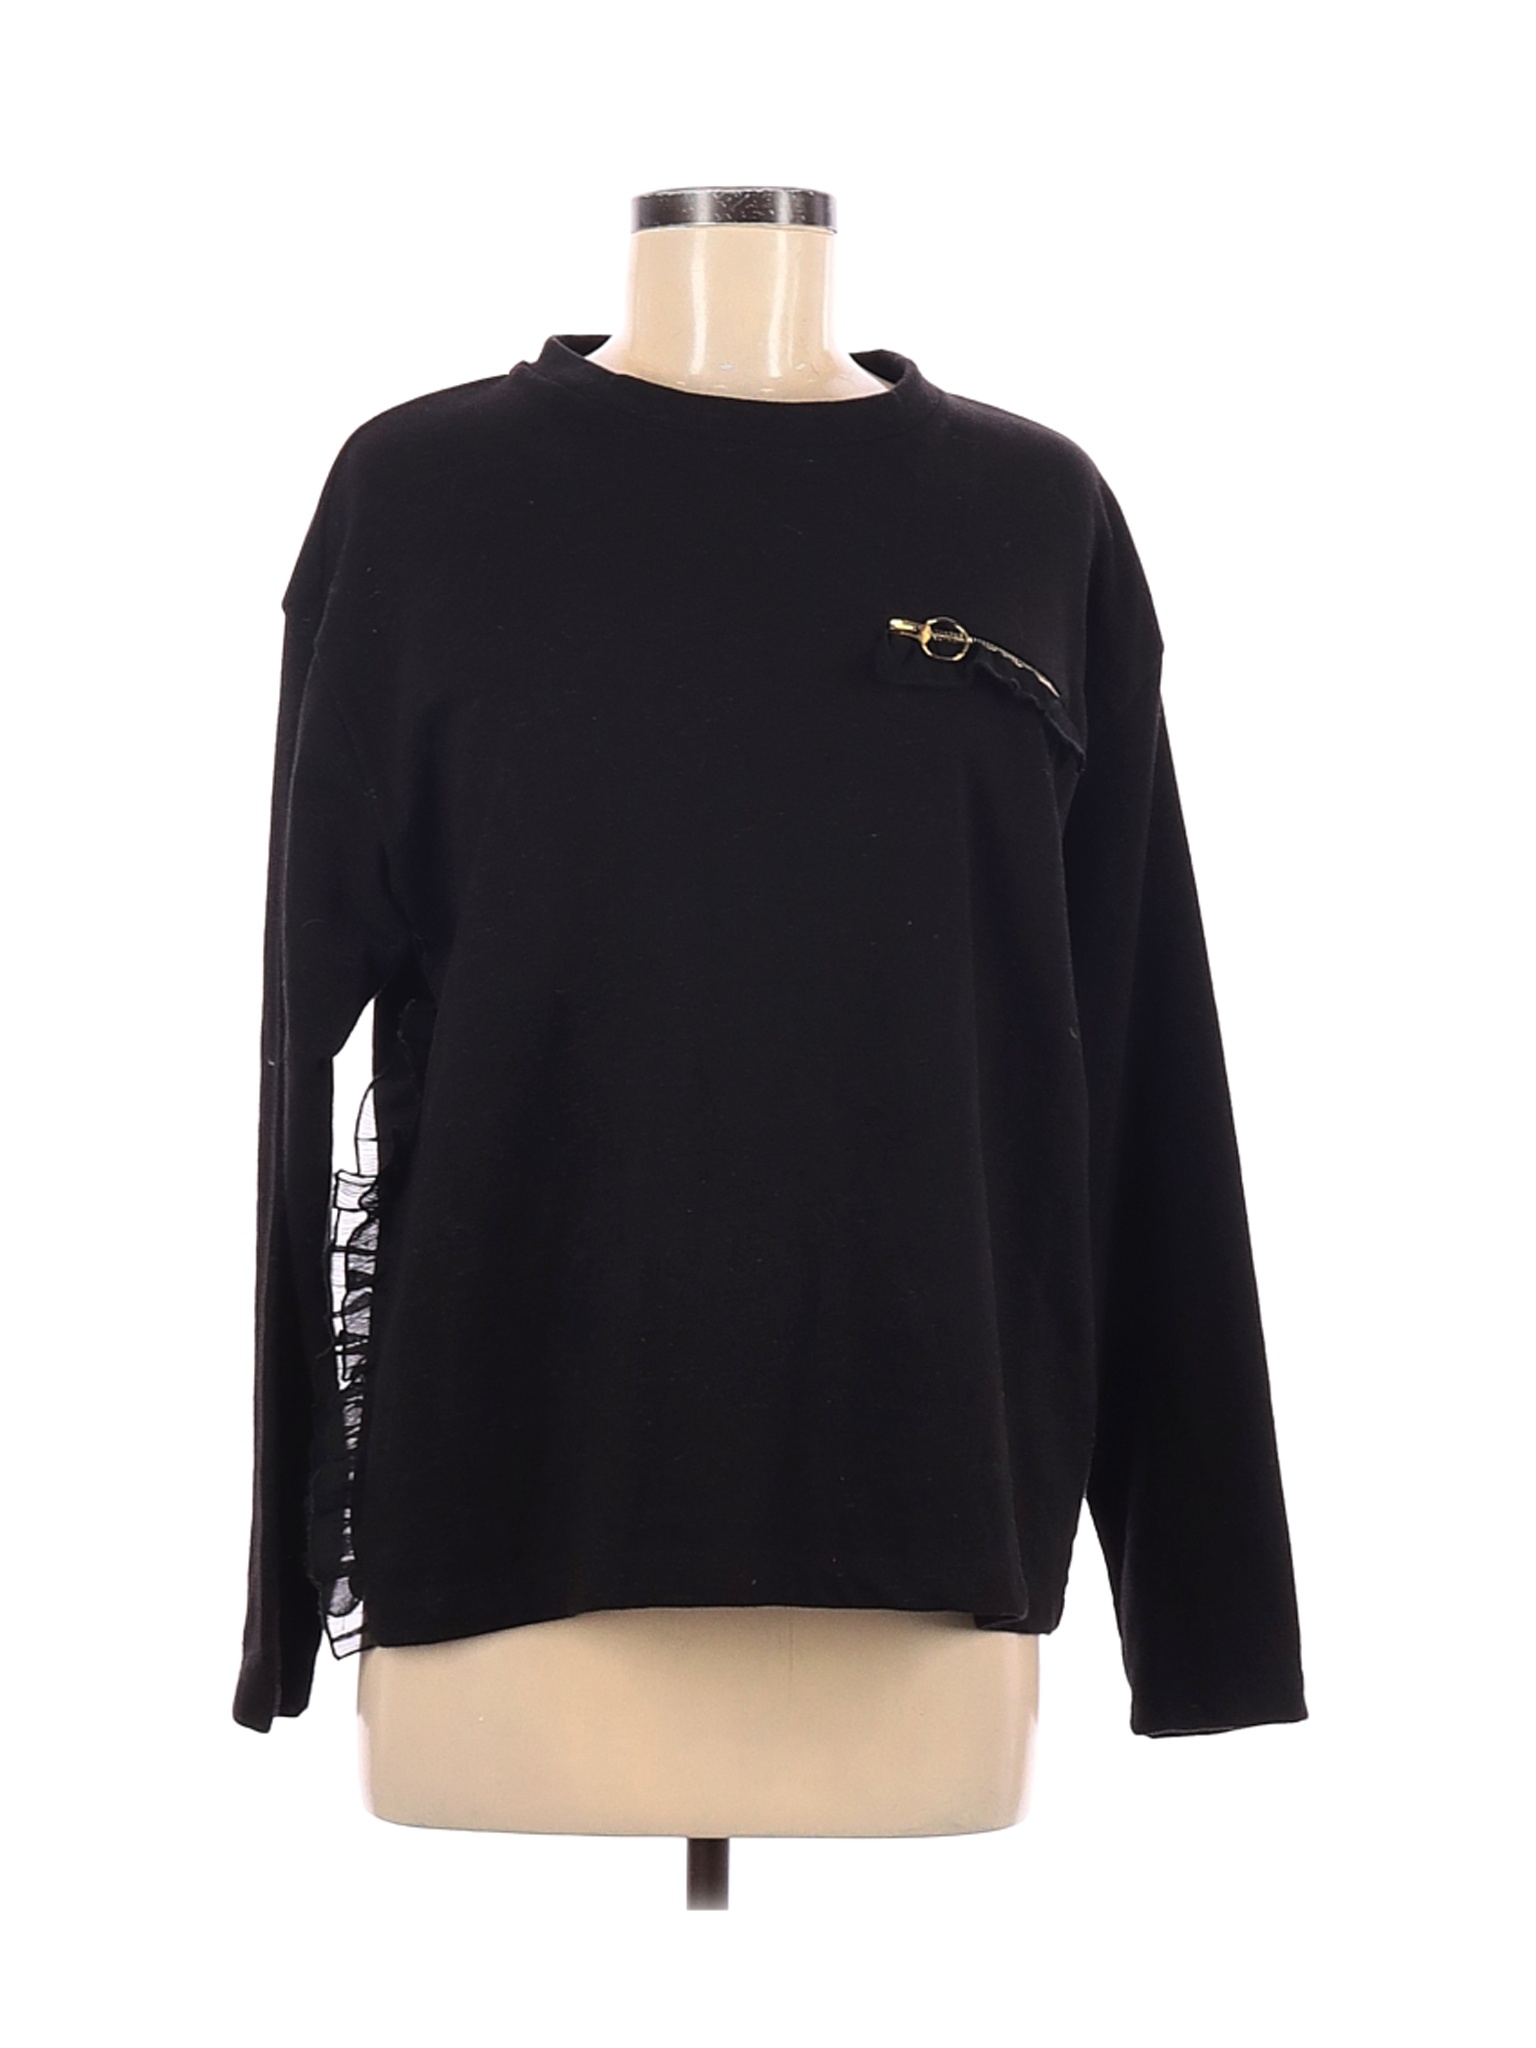 Zara W&B Collection Women Black Sweatshirt M | eBay